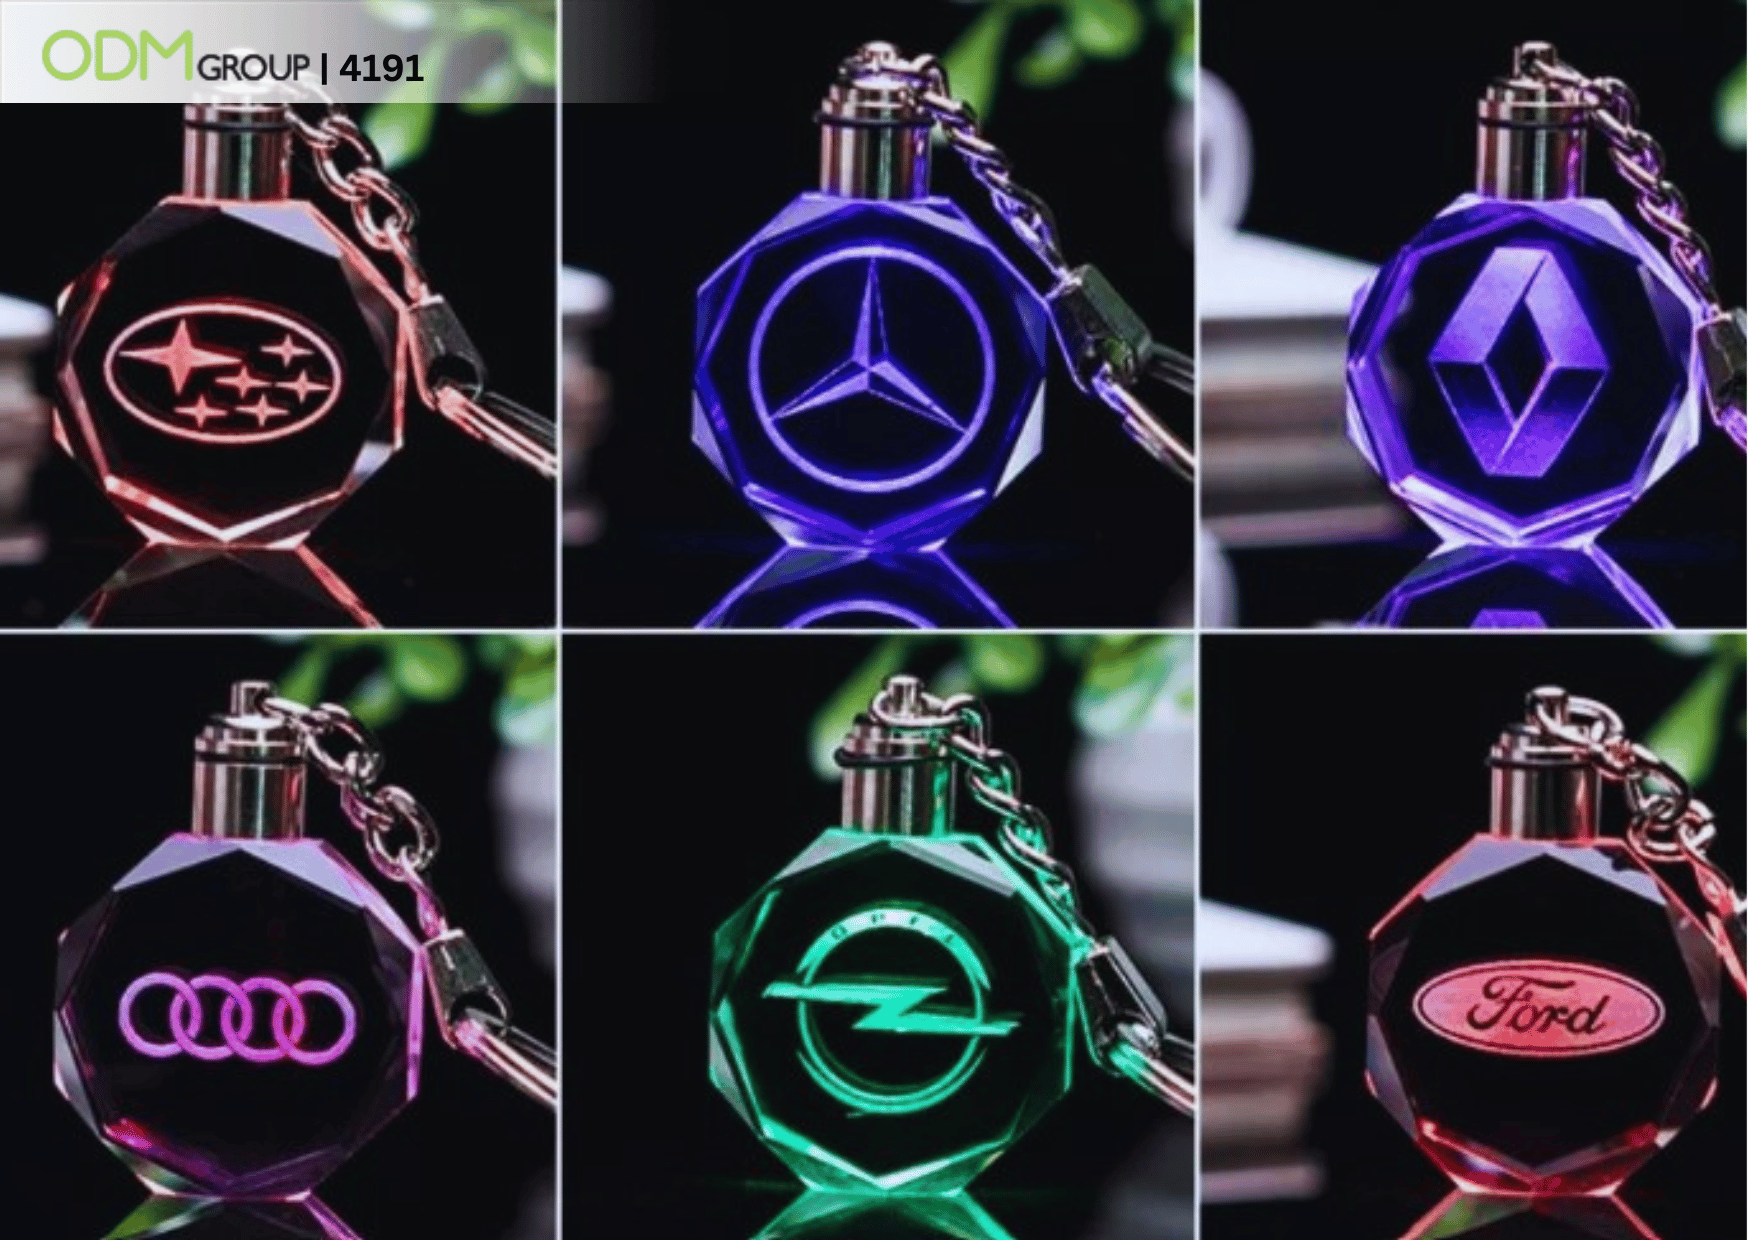 Illuminated keychains with various car brand logos.